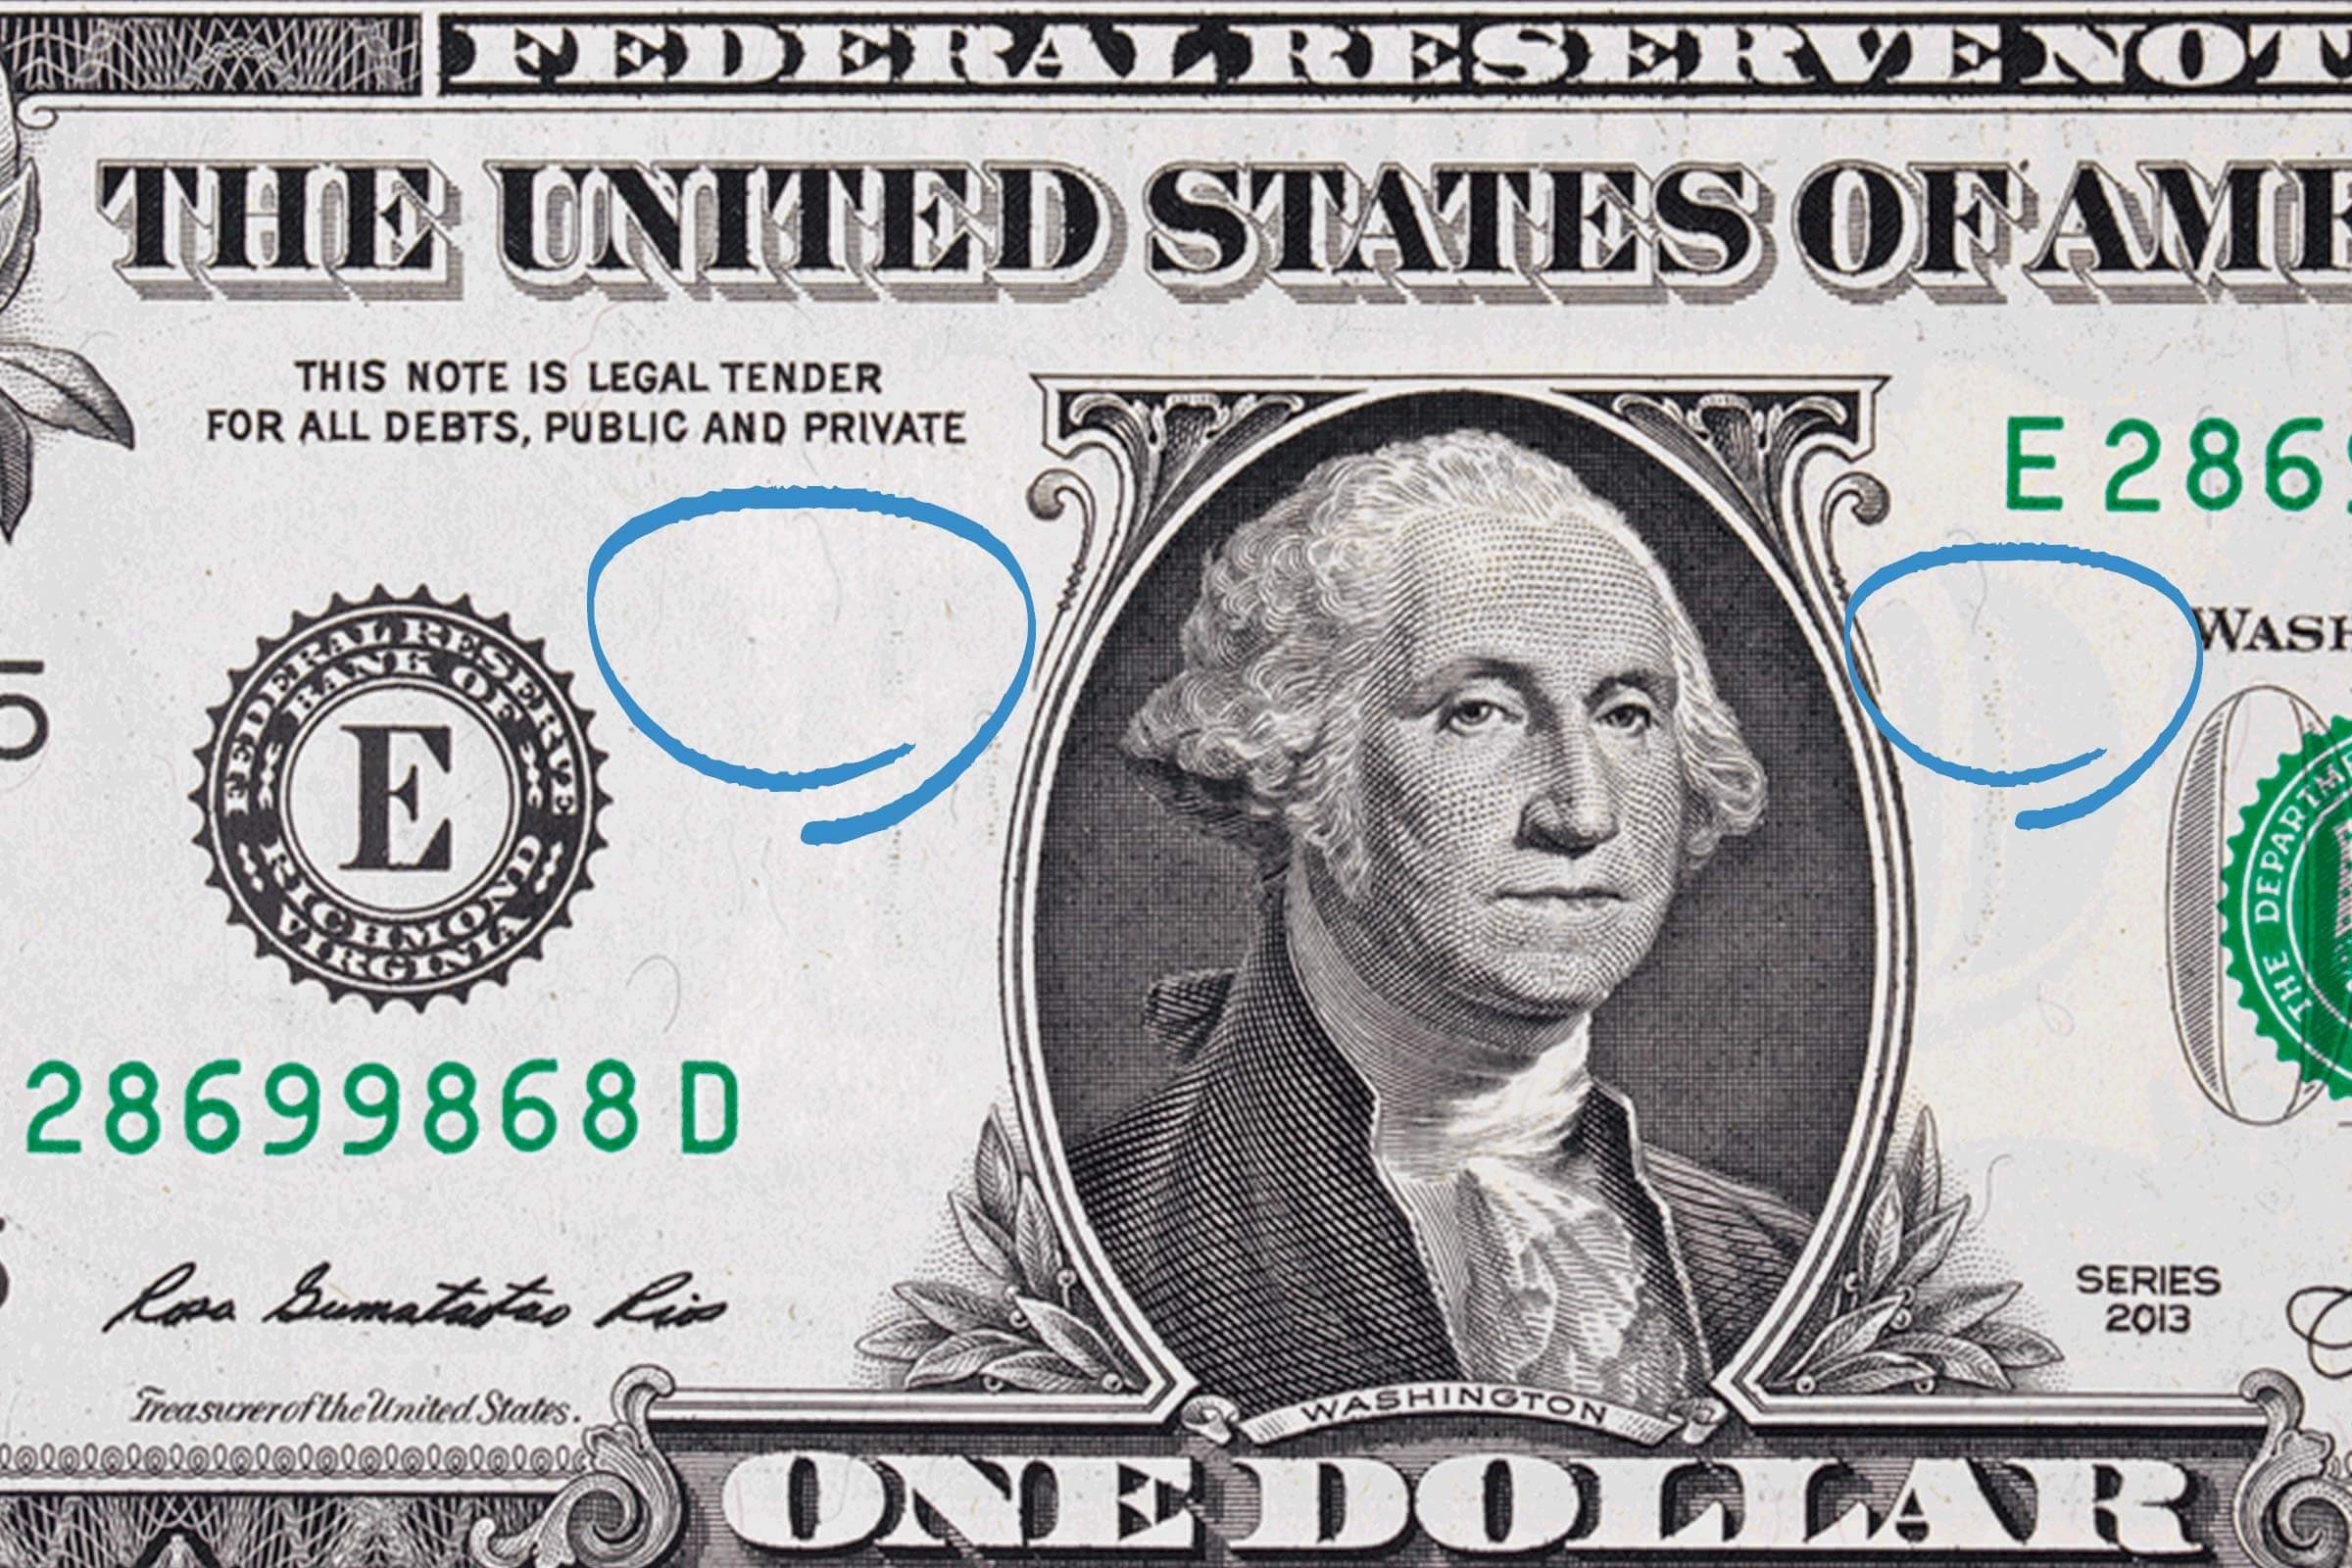 Novelty 1 U.S  Navy Dollar Bill  with clear protector sleeve MONEY A FAKE 